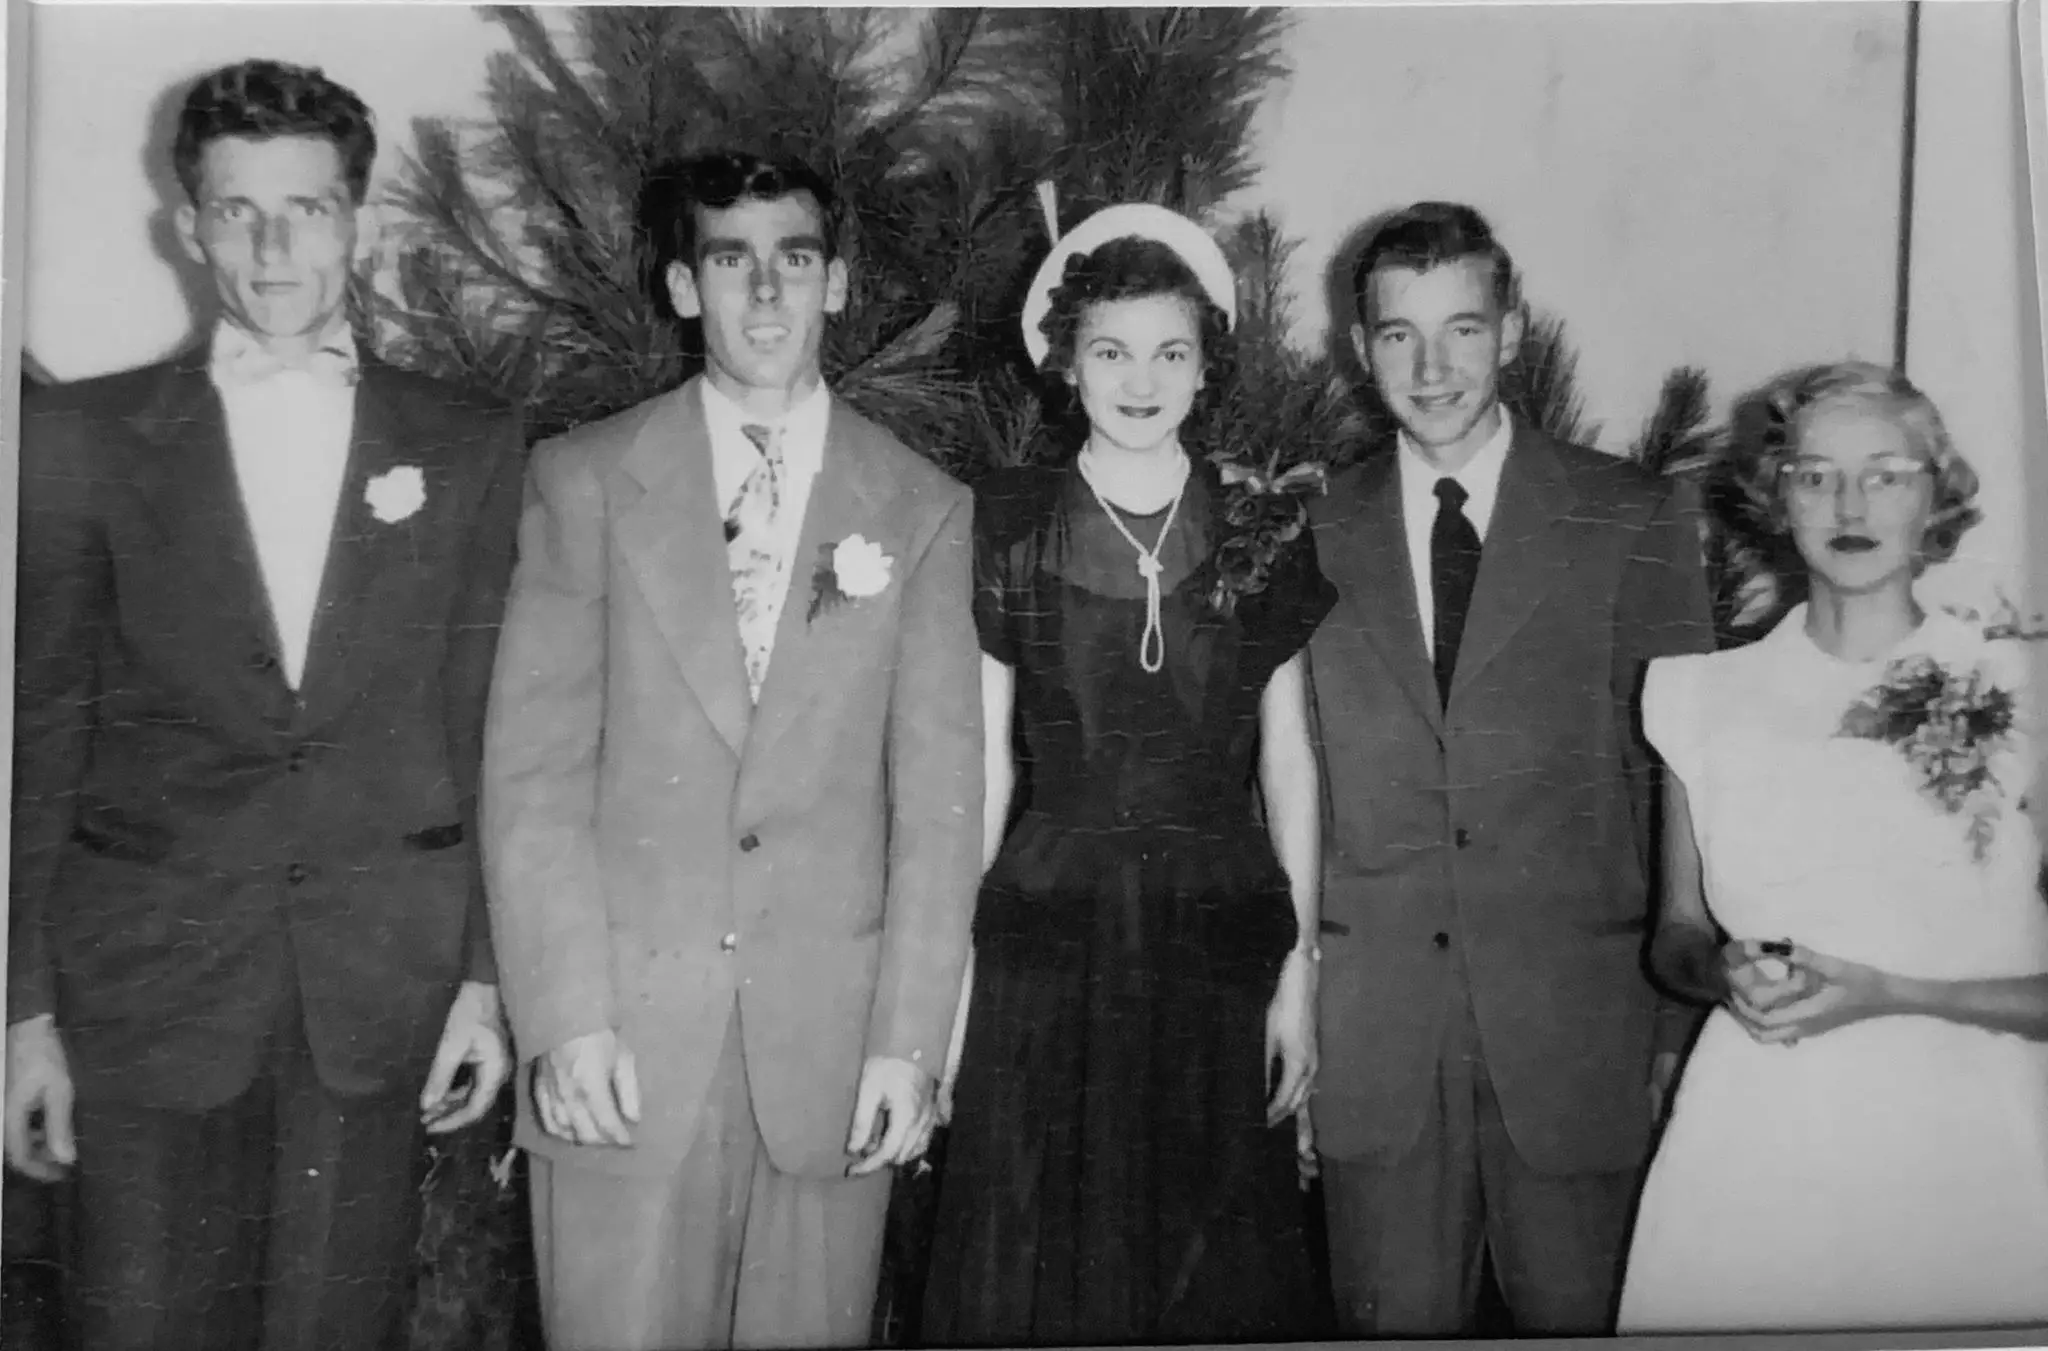 Raymond and Kathleen had been married 70 years (